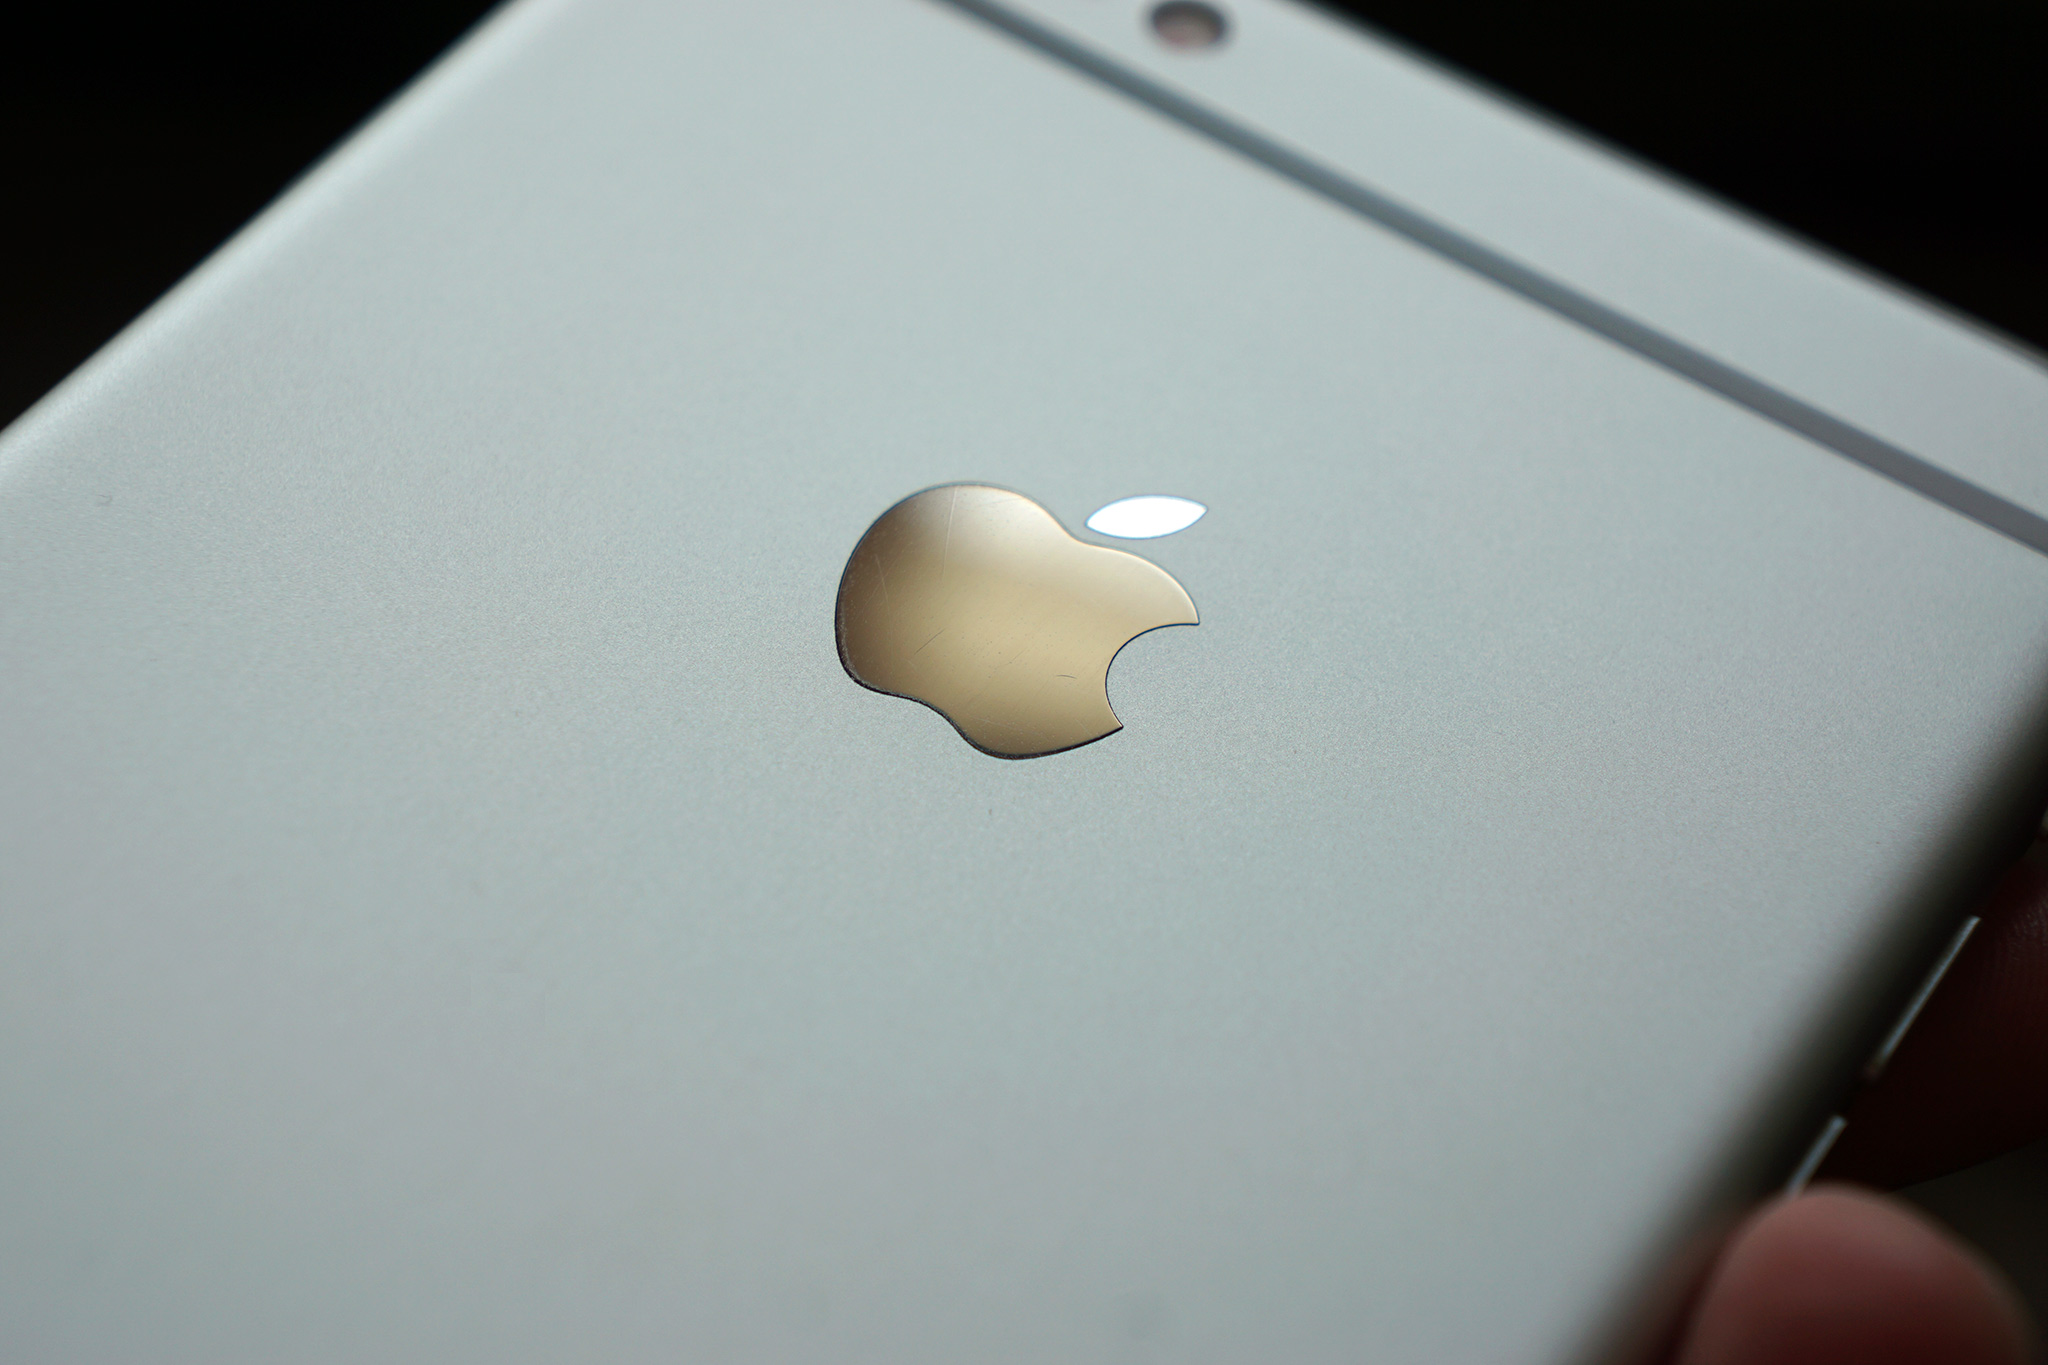 Apple logo on iPhone 6s